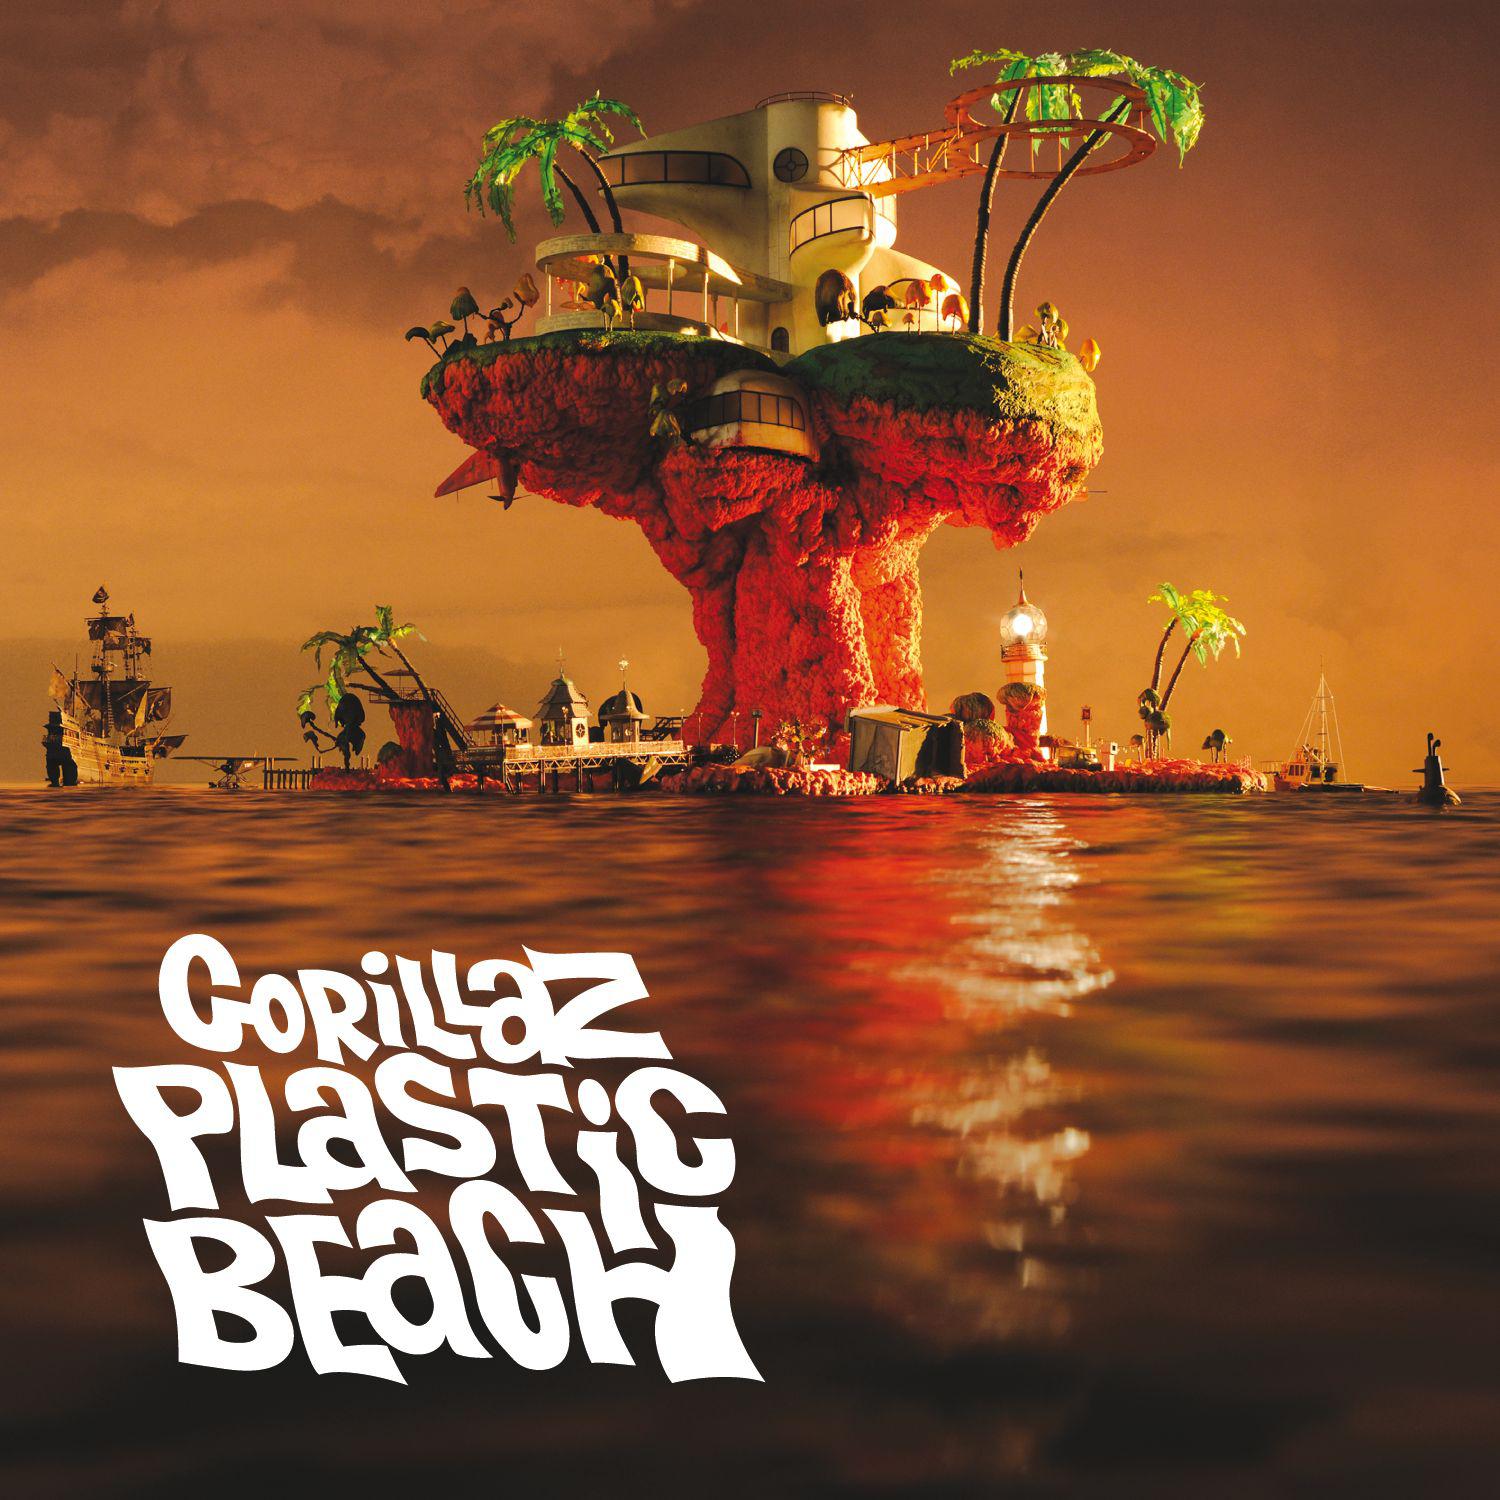 Gorillaz - Pirate's Progress (iTunes Deluxe Edition and Japanese Bonus track))